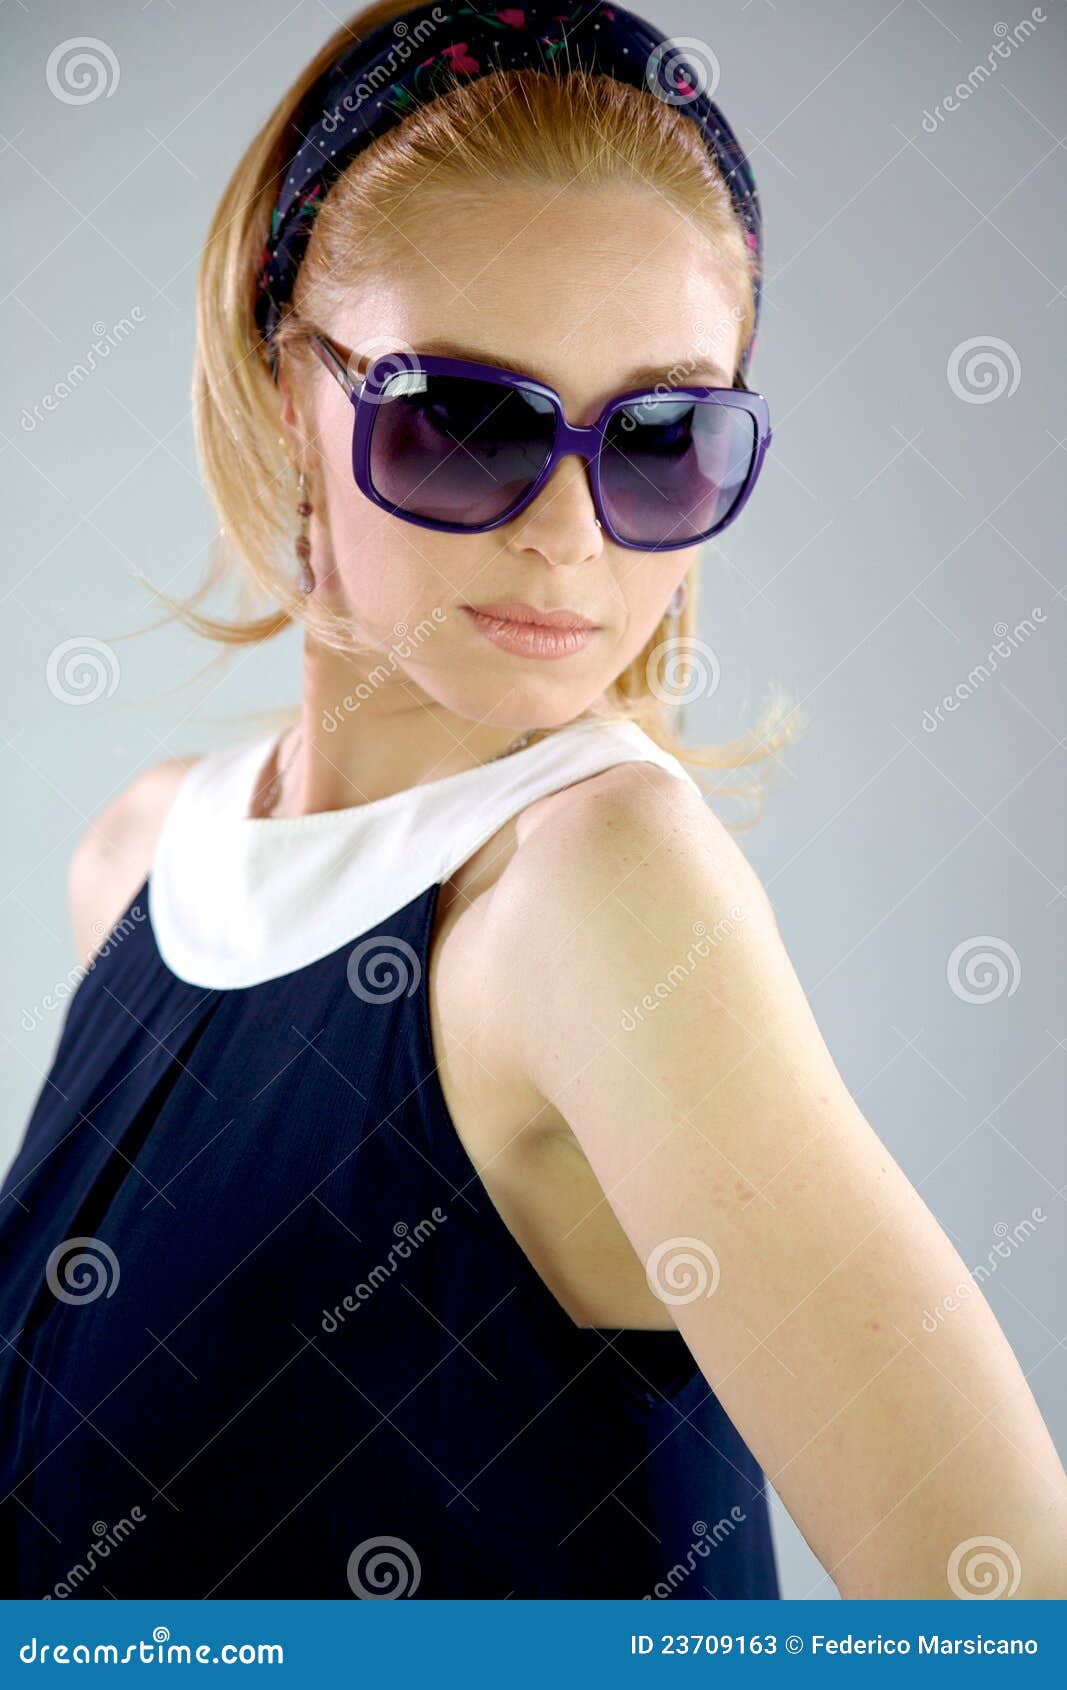 Blonde Fashion Girl 60s Eyewear Stock Image - Image of protection ...